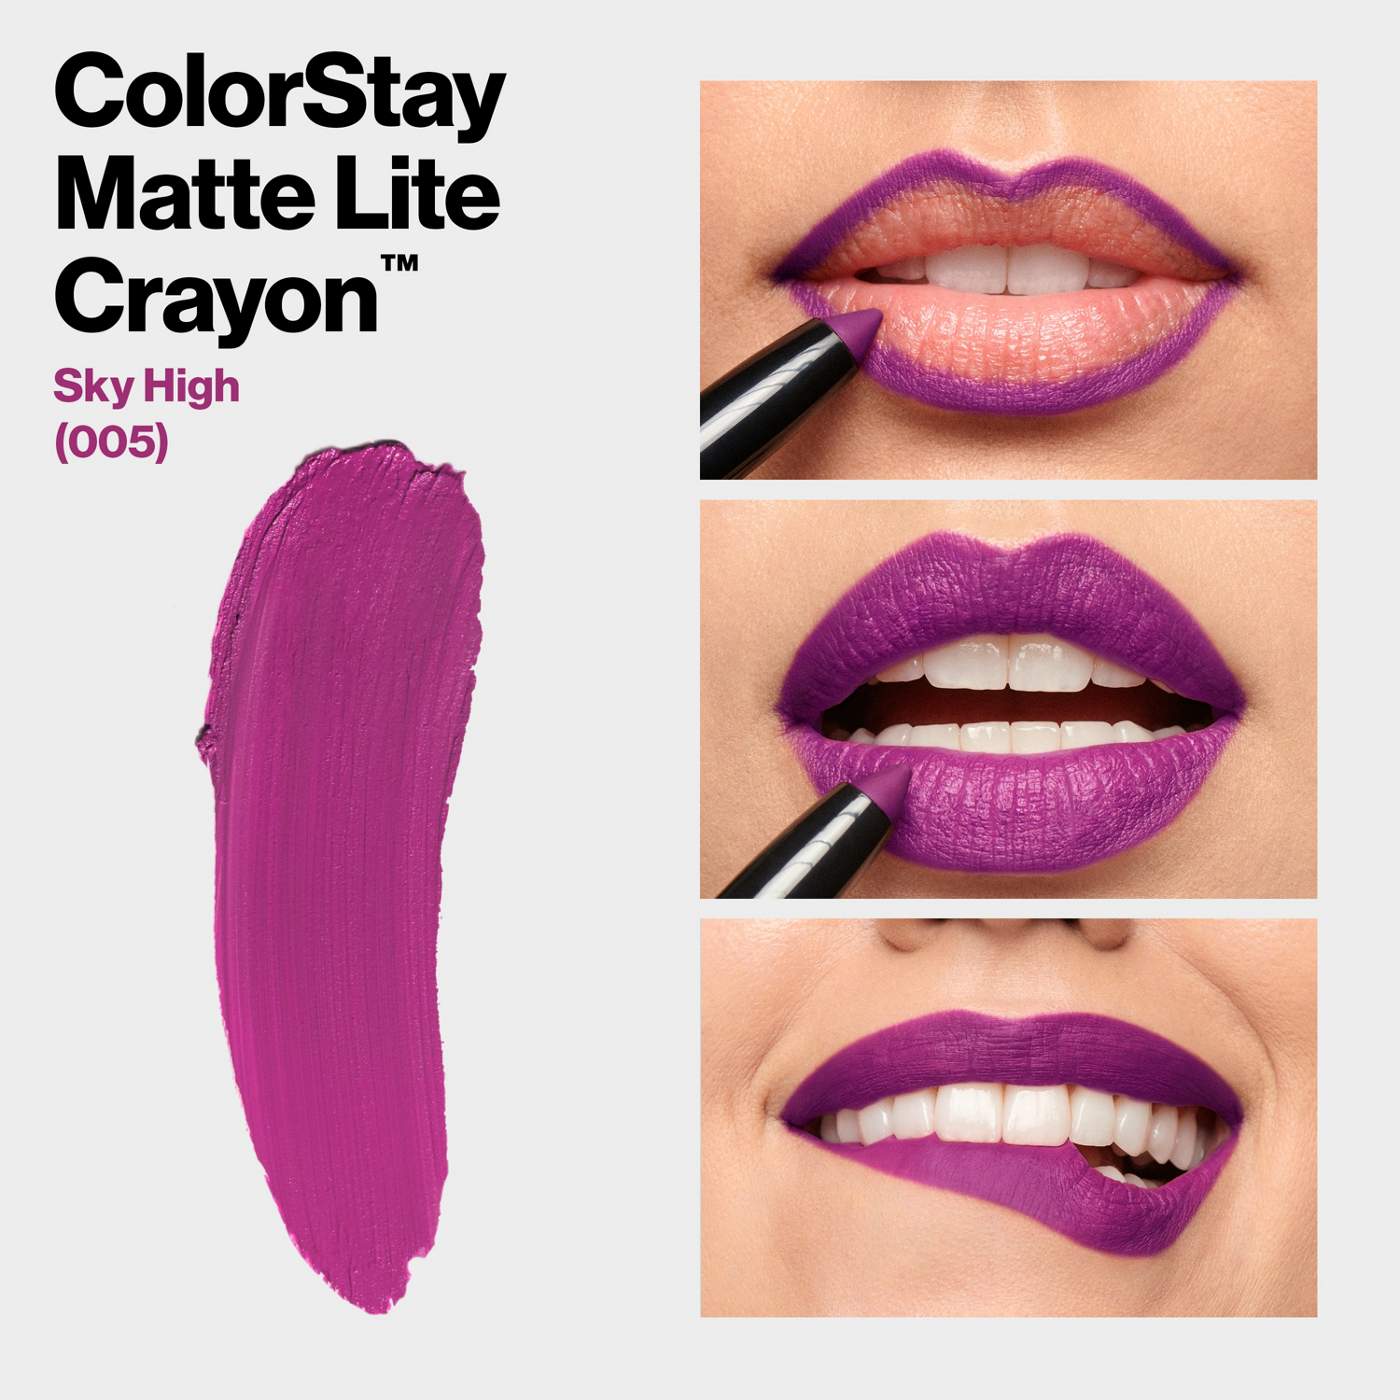 Revlon ColorStay Matte Lite Crayon Lipstick - Sky High; image 7 of 7